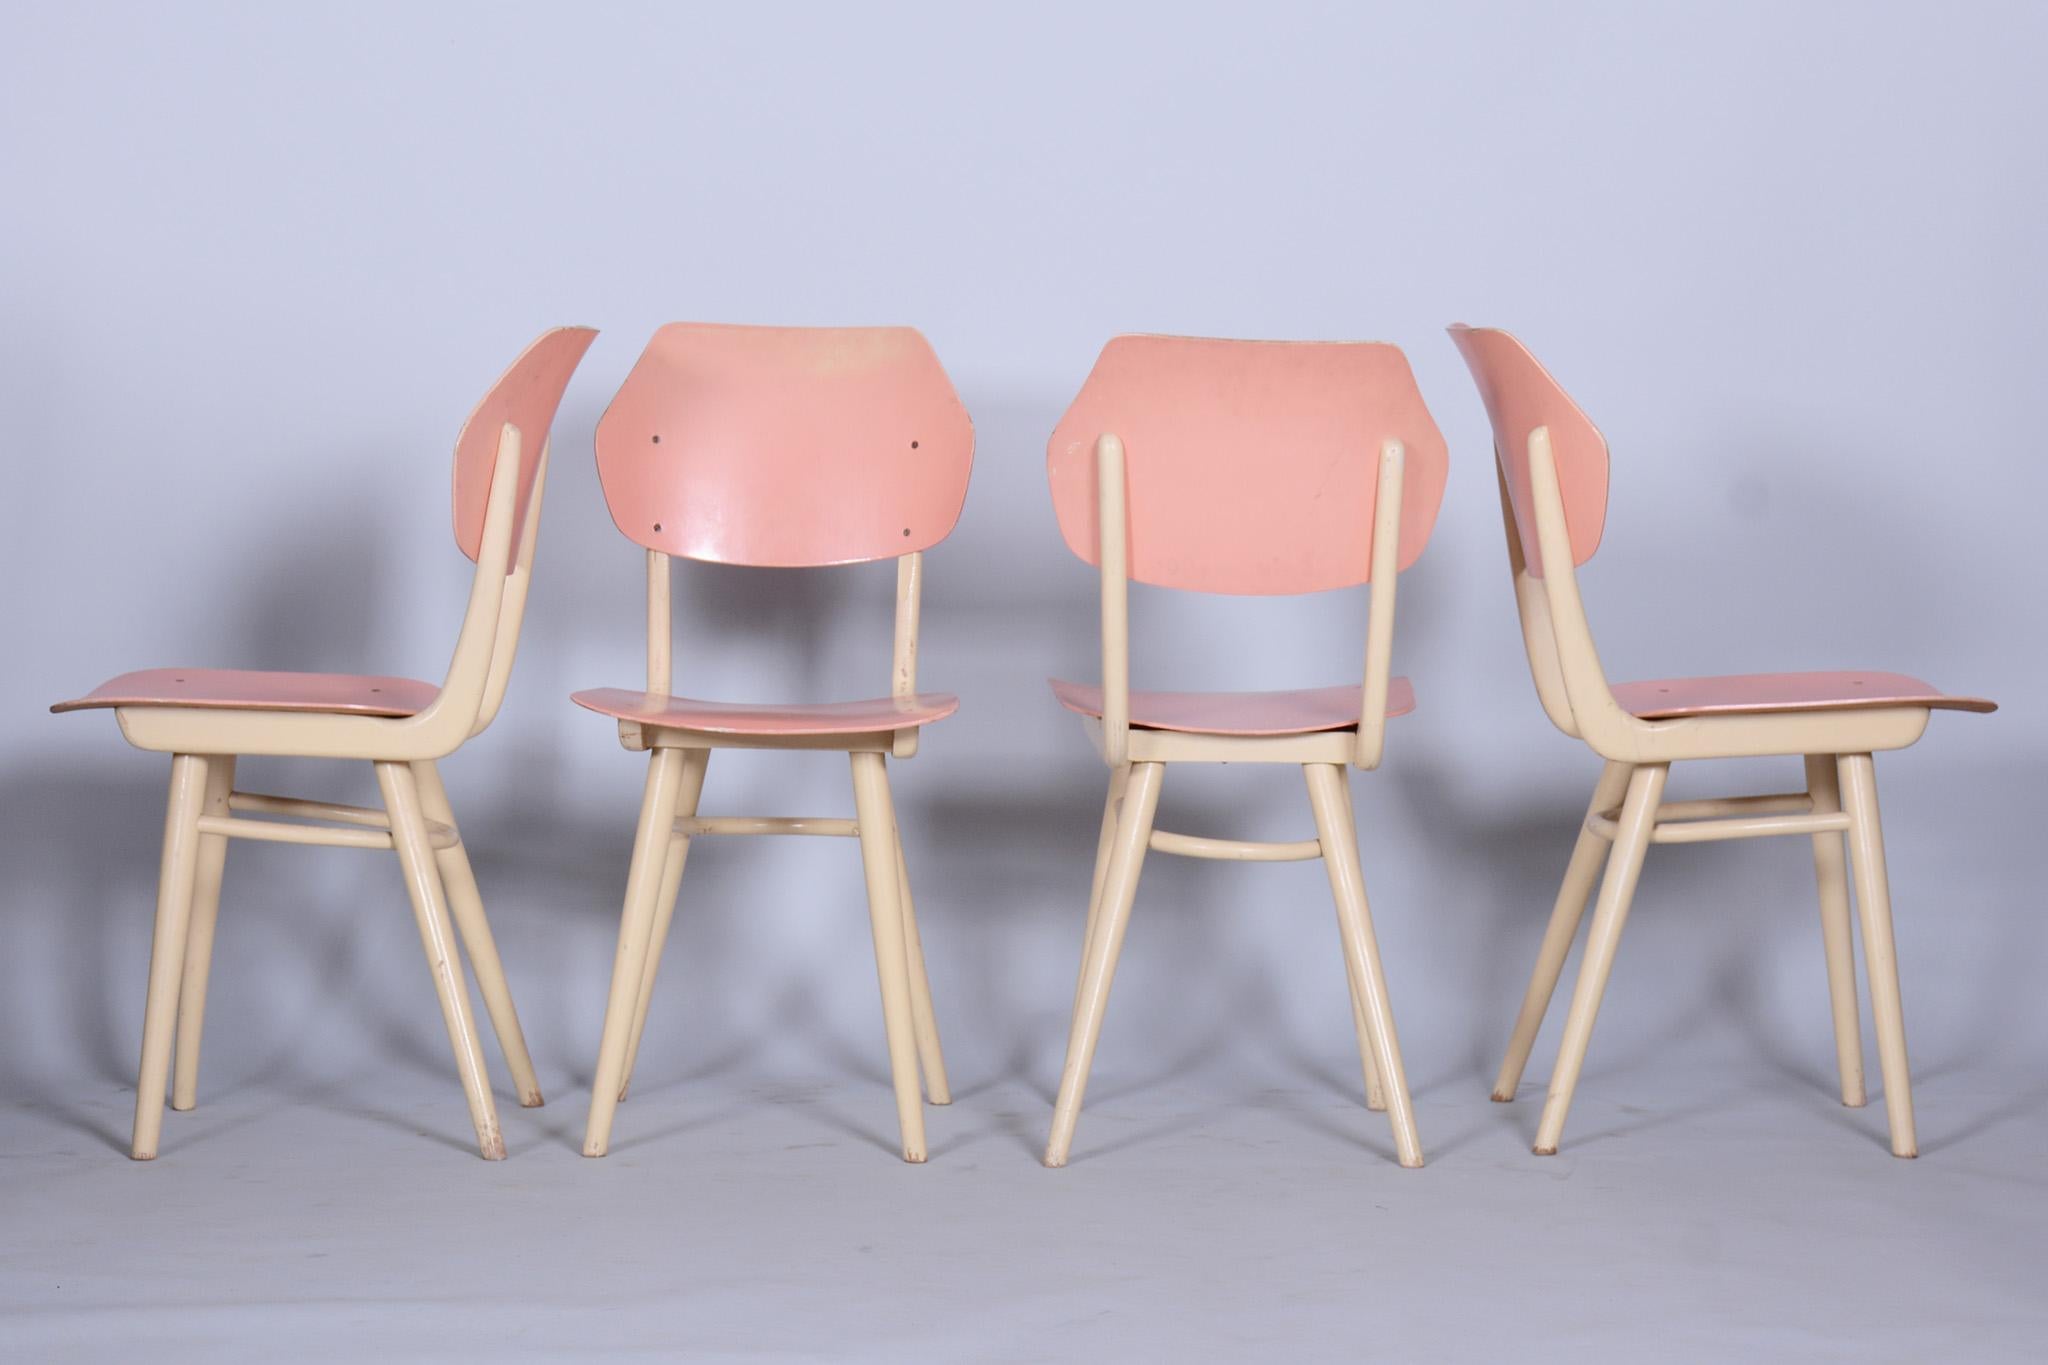 Set of Four Original Midcentury Chairs, Jitona Sobeslav, Beech, Czechia, 1950s For Sale 1